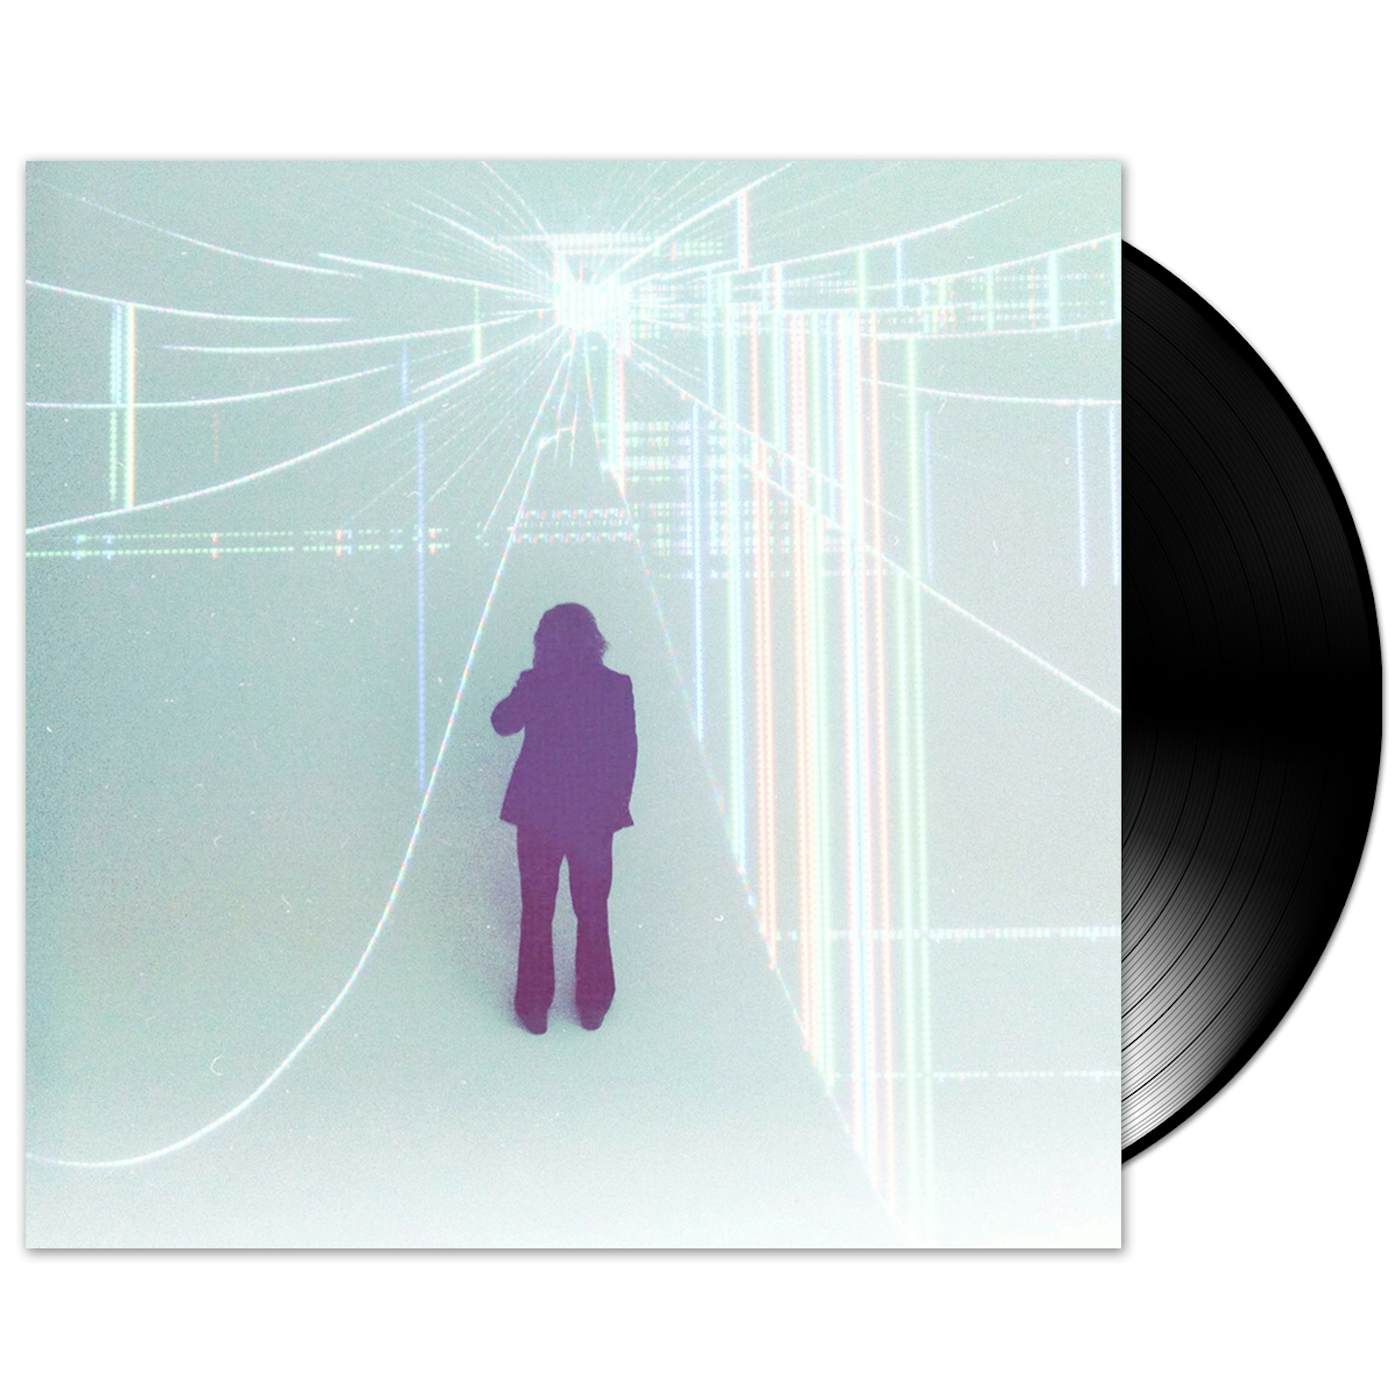 Jim James "Regions of Light and Sound of God" LP (Vinyl)